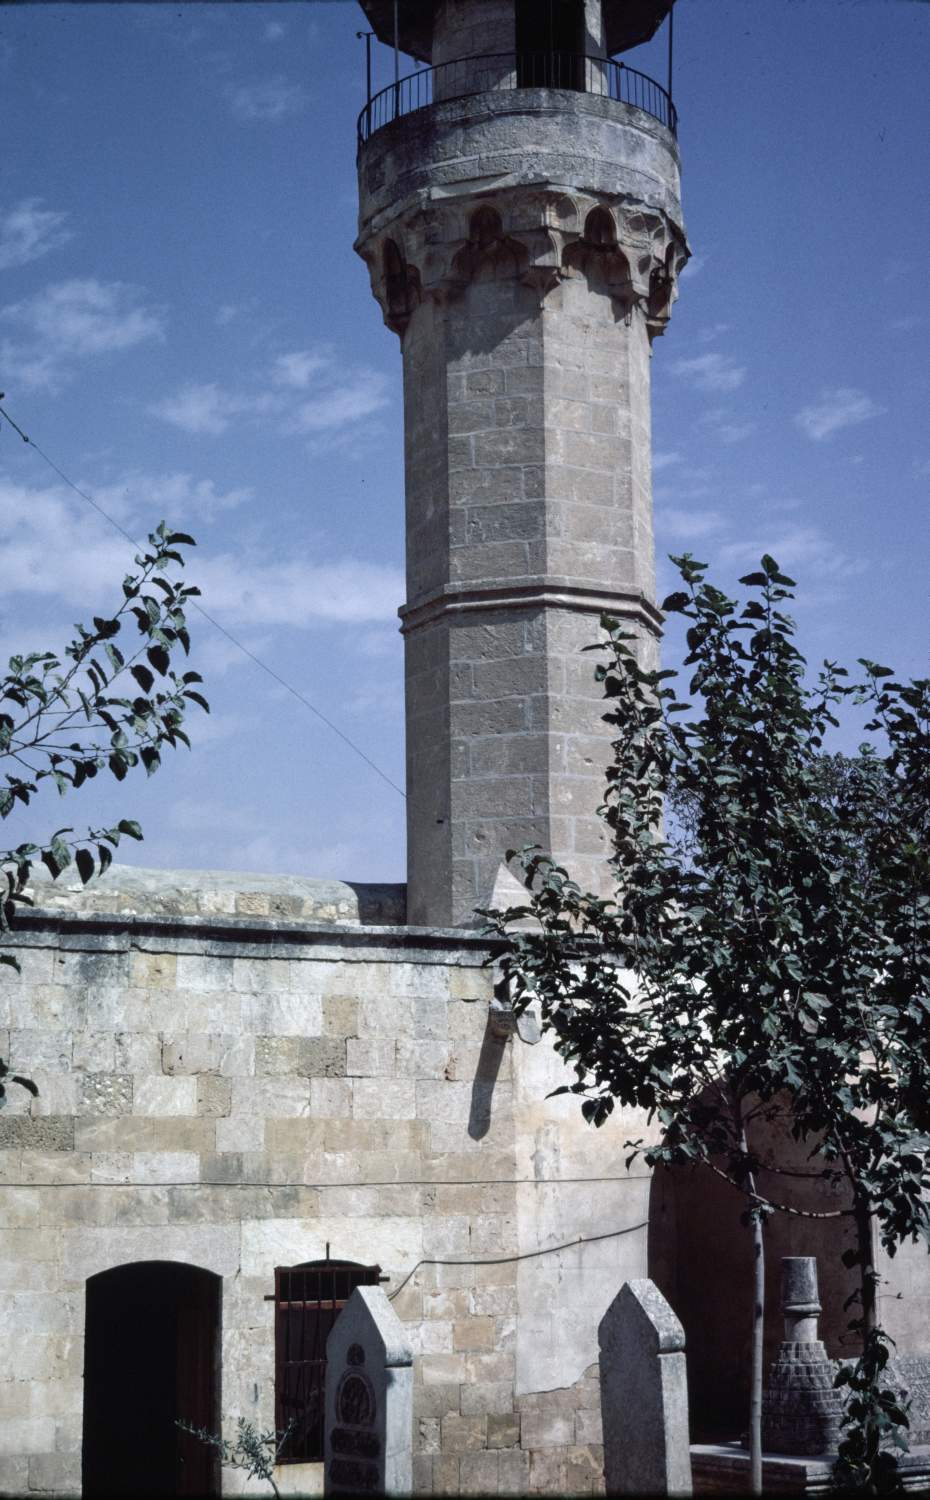 Maqam Ibrahim (Salihin) - Exterior view showing portal and minaret.